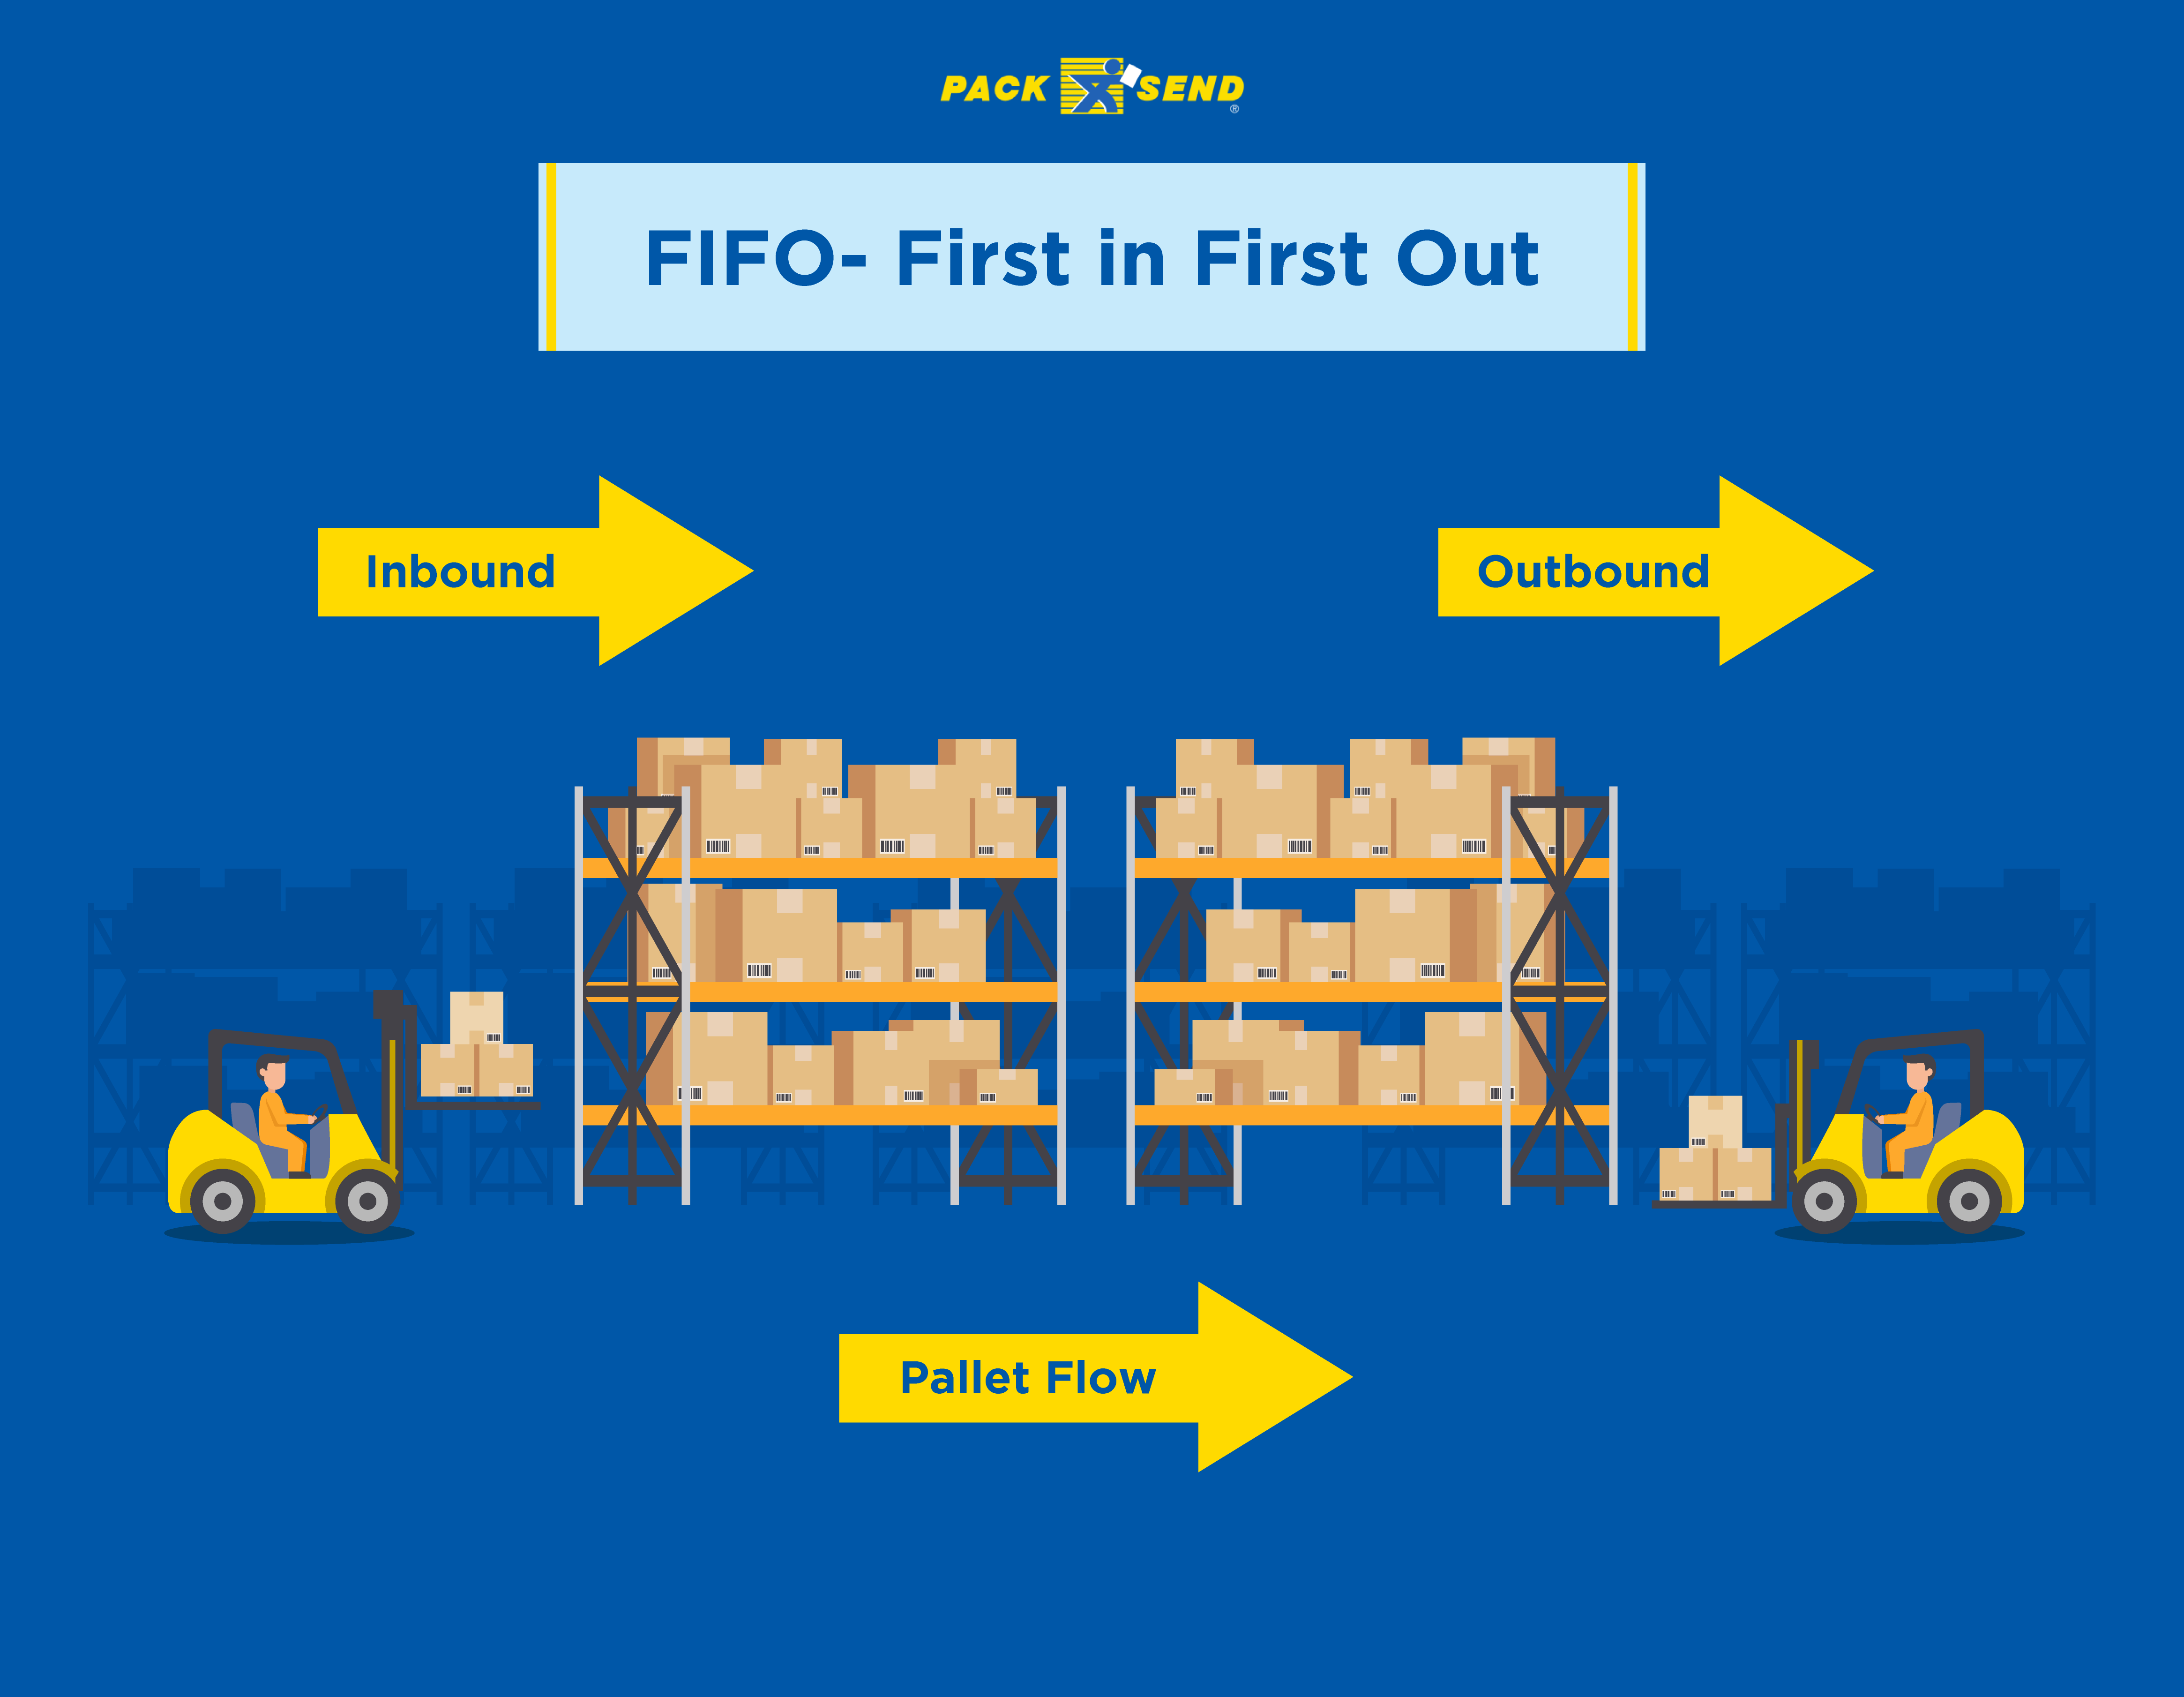 FIFO inventory management method